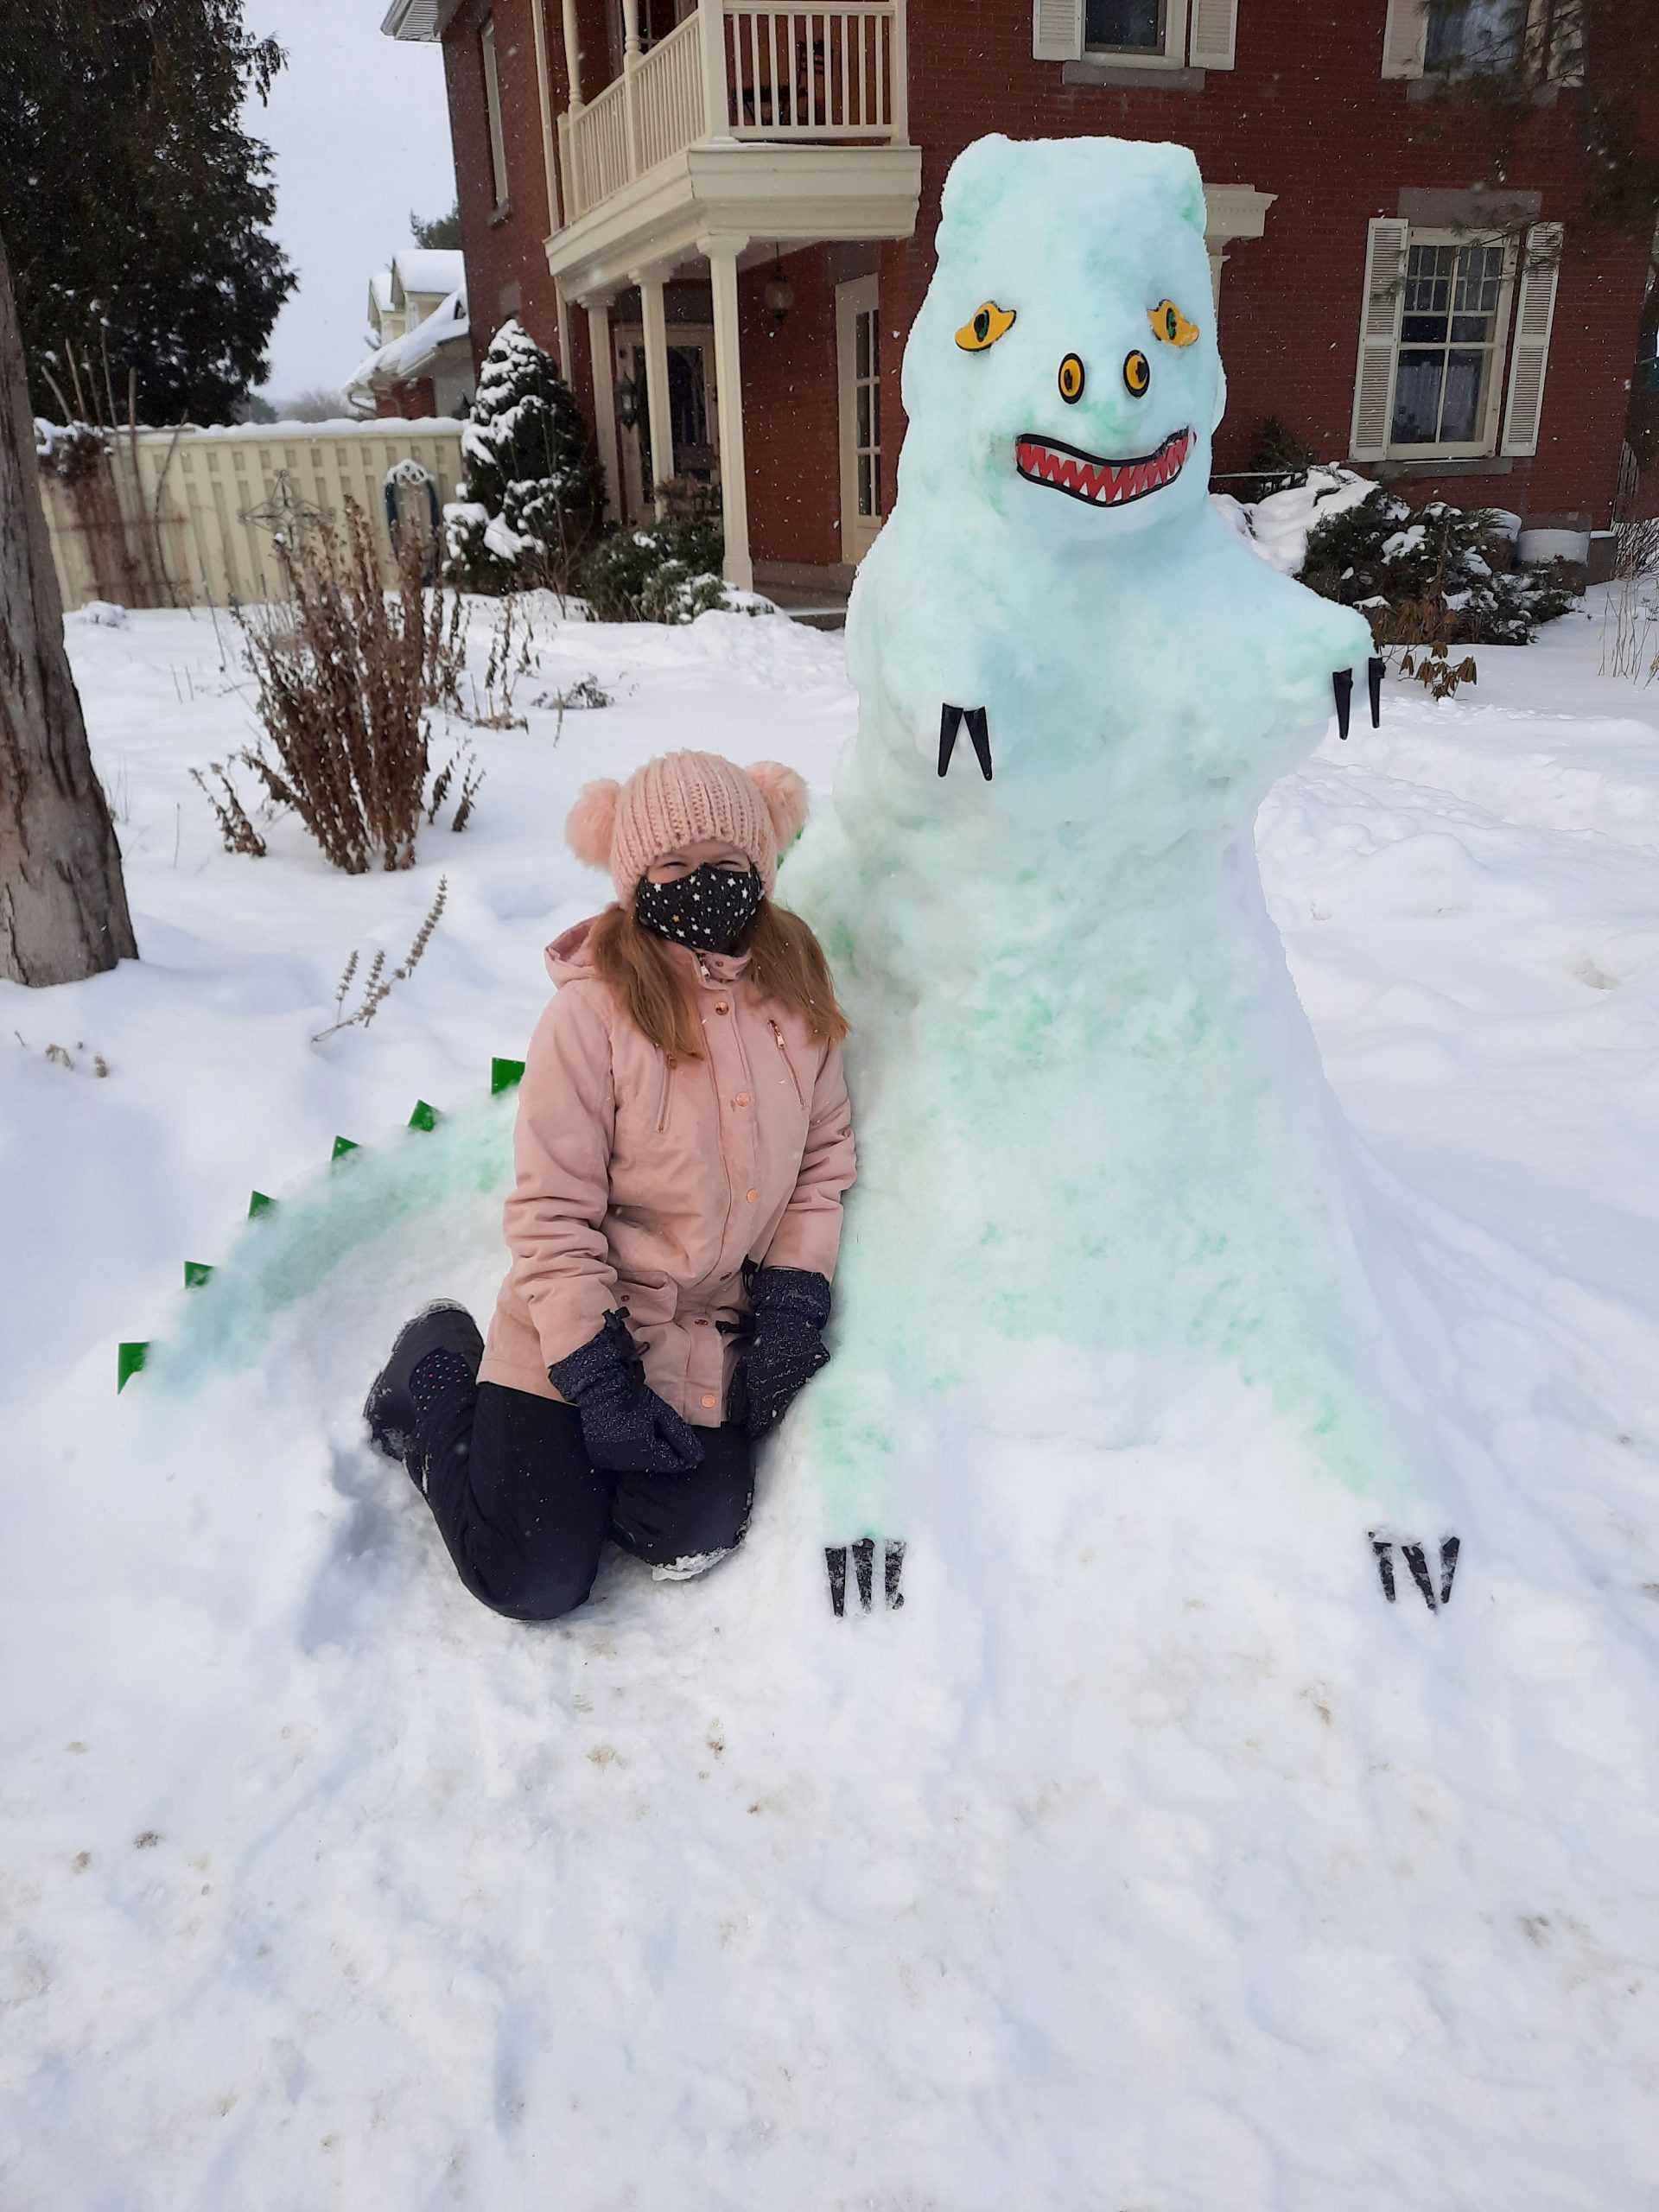 Erin snow dinosaur makes people smile